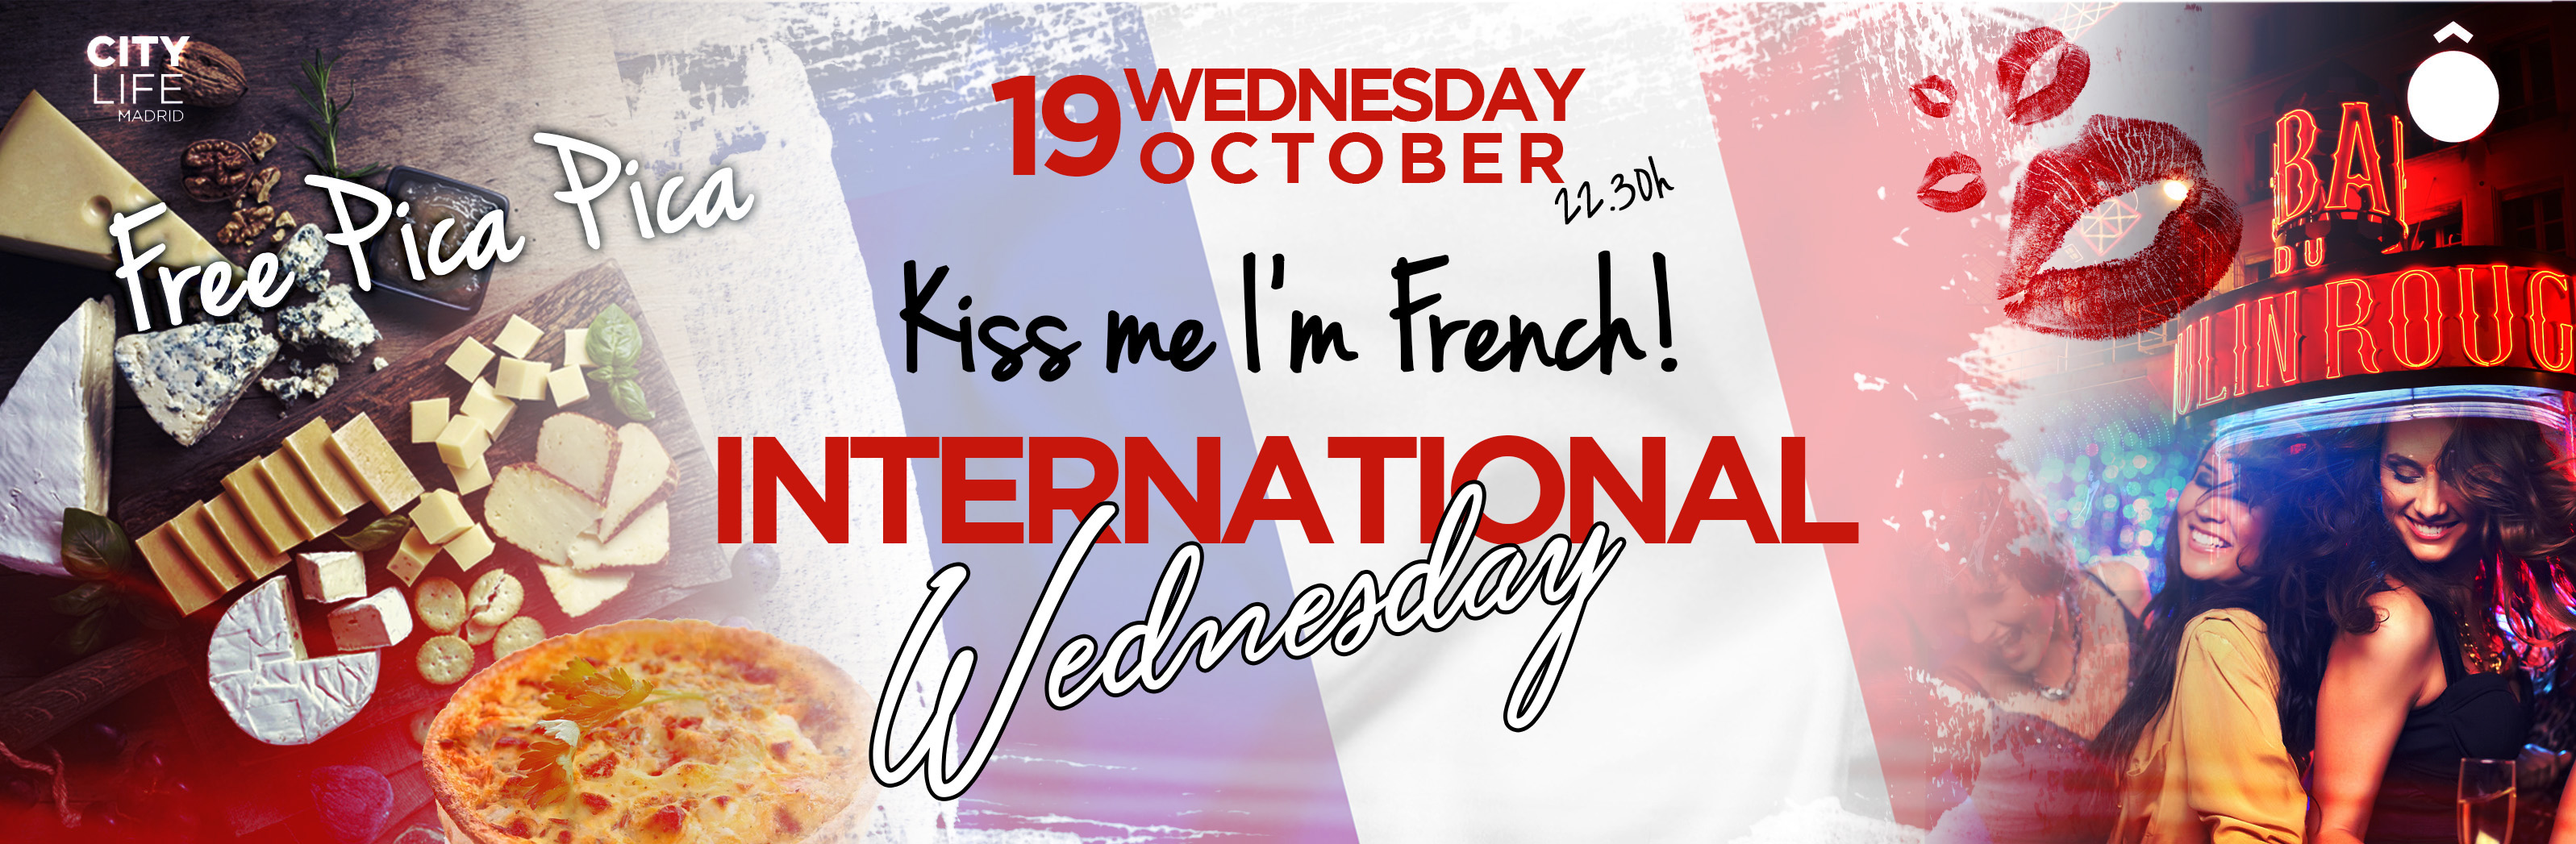 Kiss me I’m French - Free Dinner & Free Open Bar! @Shoko Lounge Club!